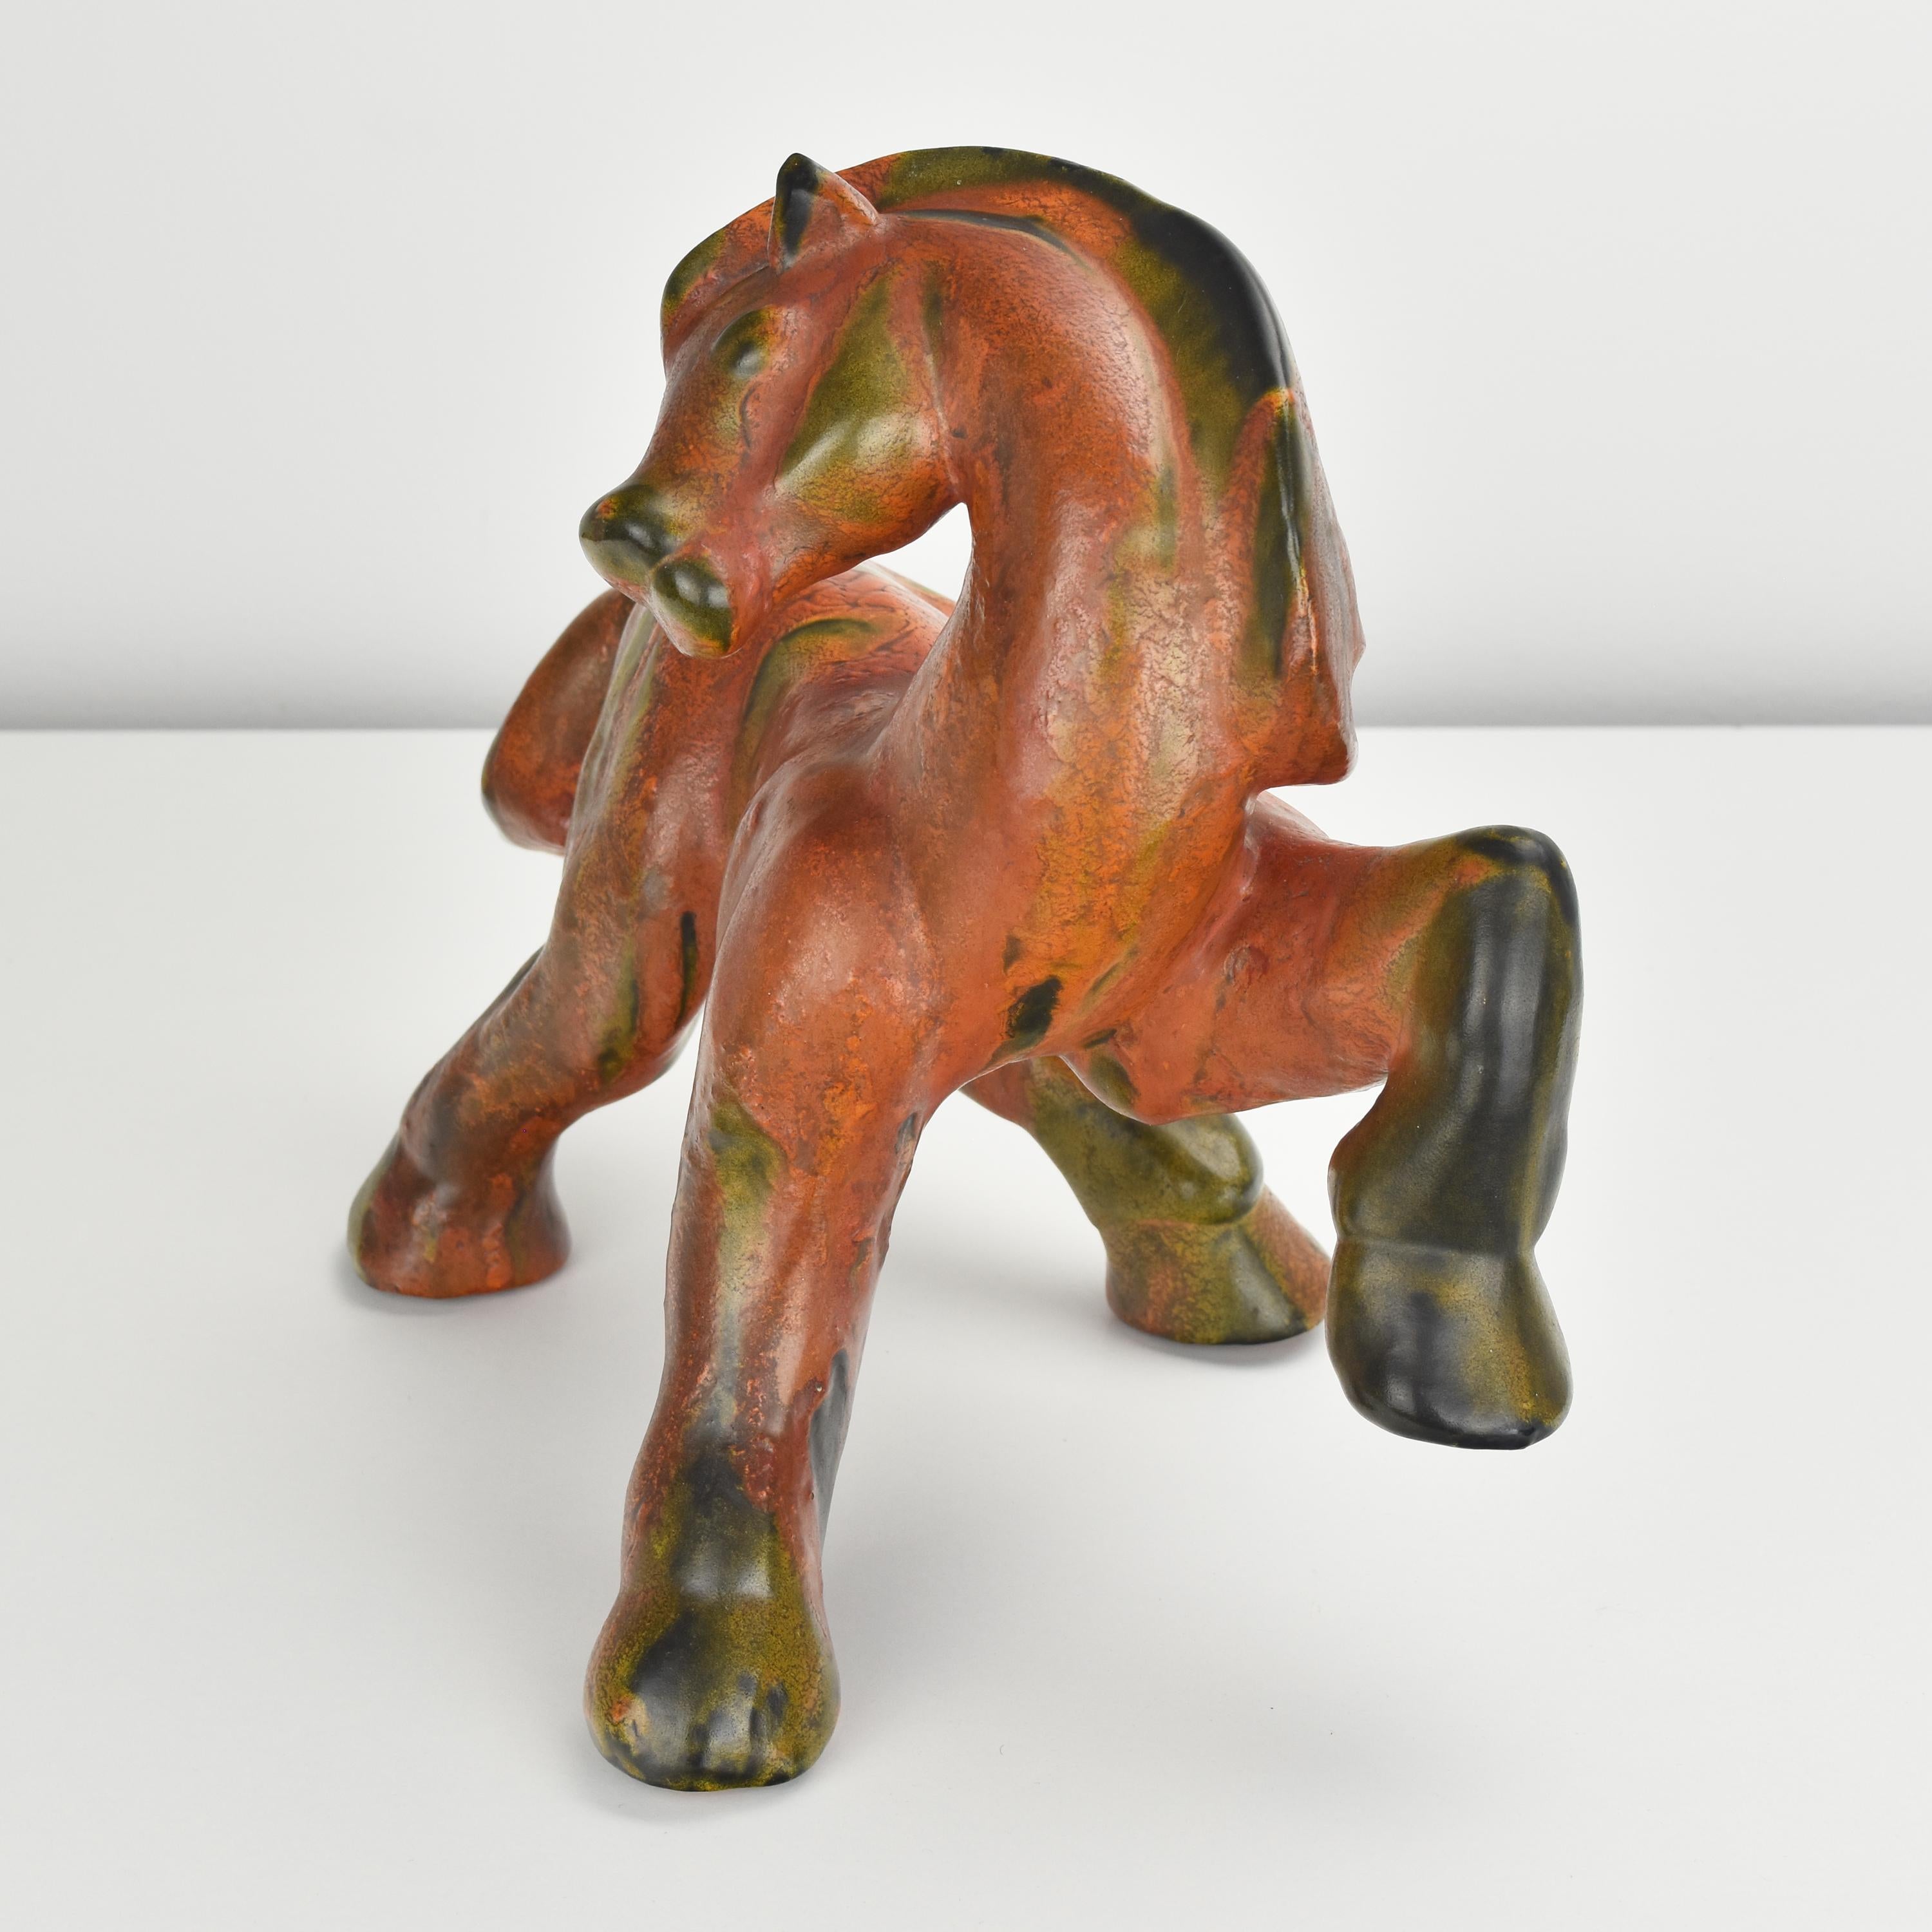 German Art Deco Pottery Ceramic Horse Sculpture Figurine After Franz Marc For Sale 3